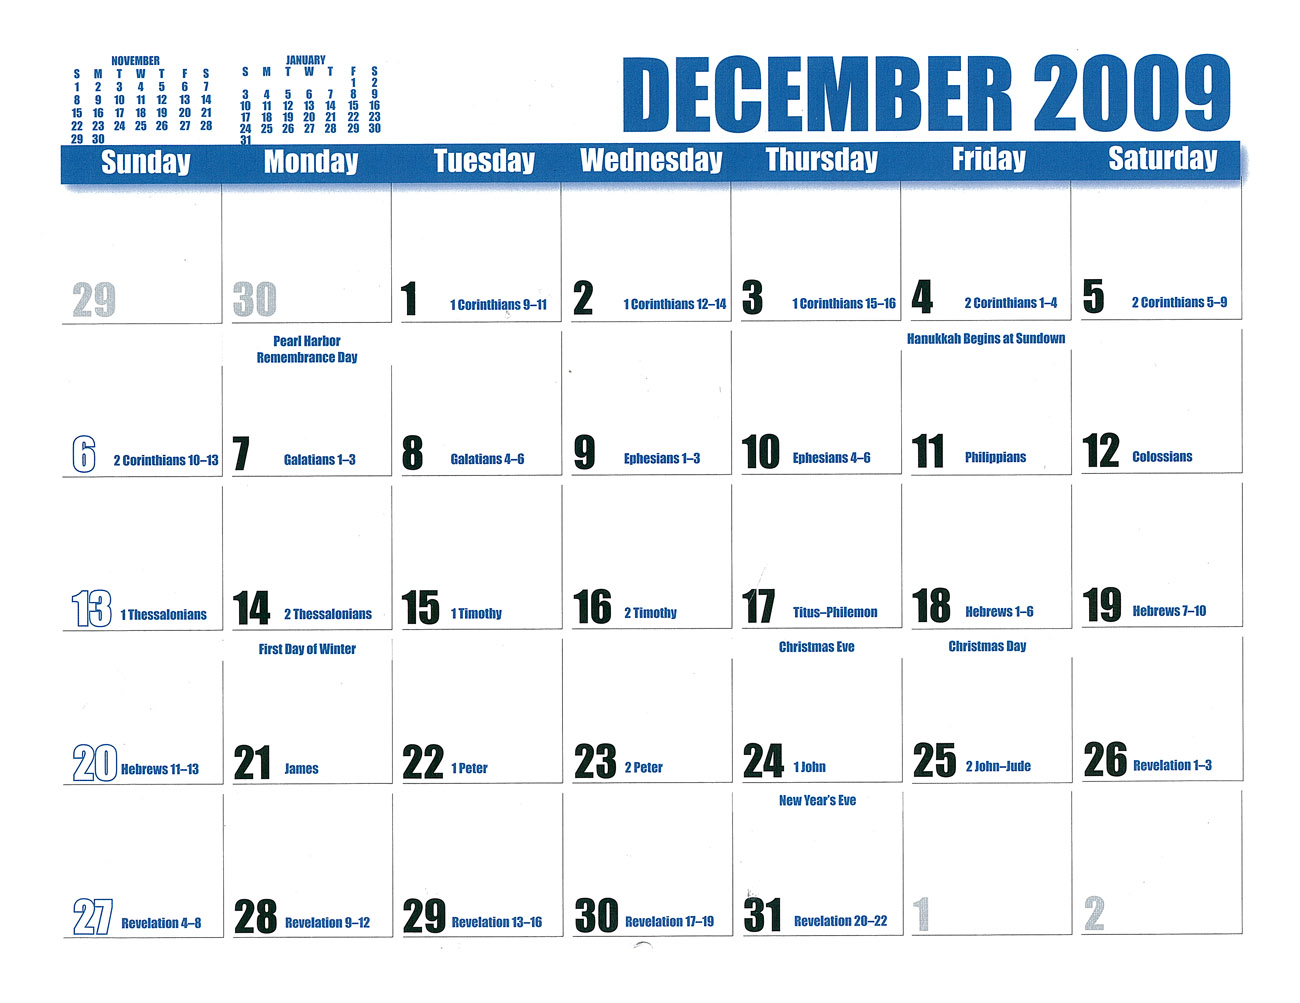 2009 Prophecy Calendar: December - beginning of sorrows